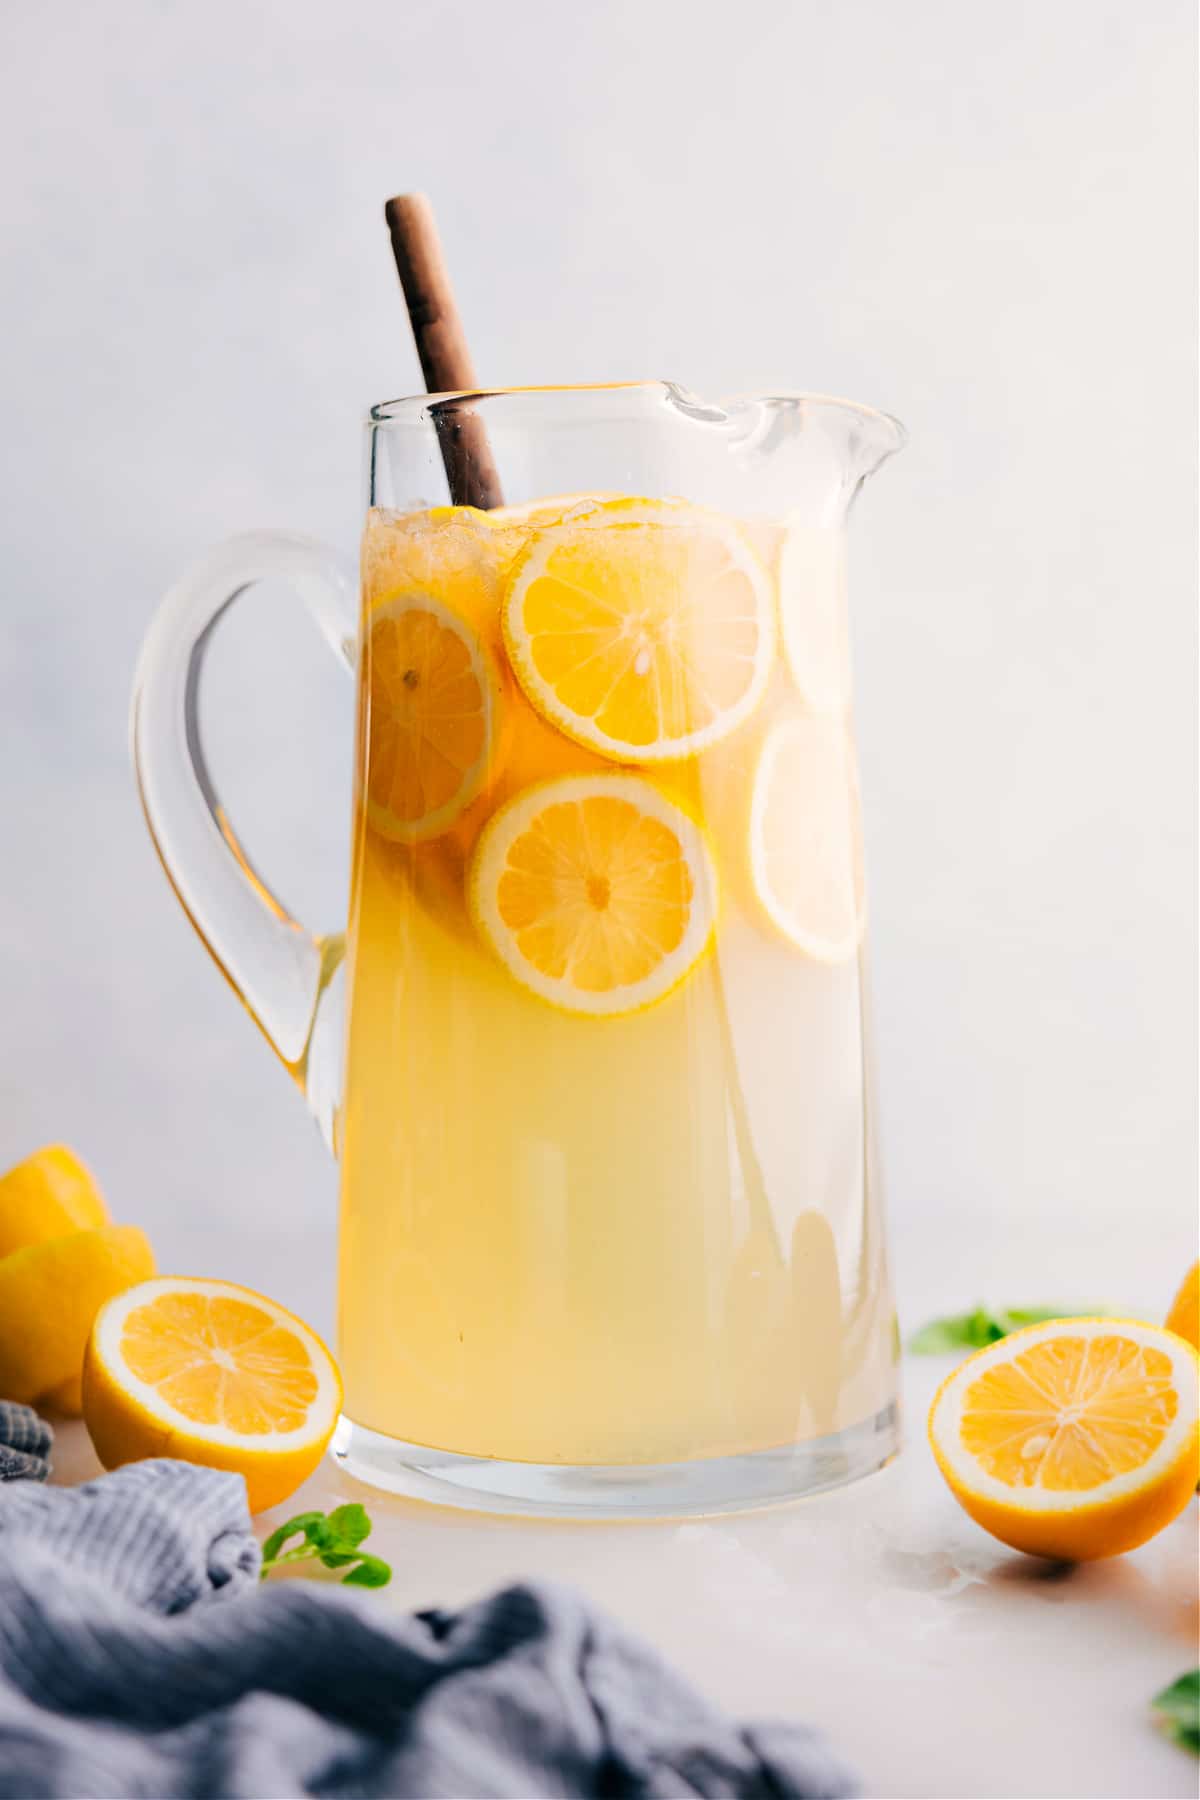 Lemonade recipe in a pitcher with fresh lemons.